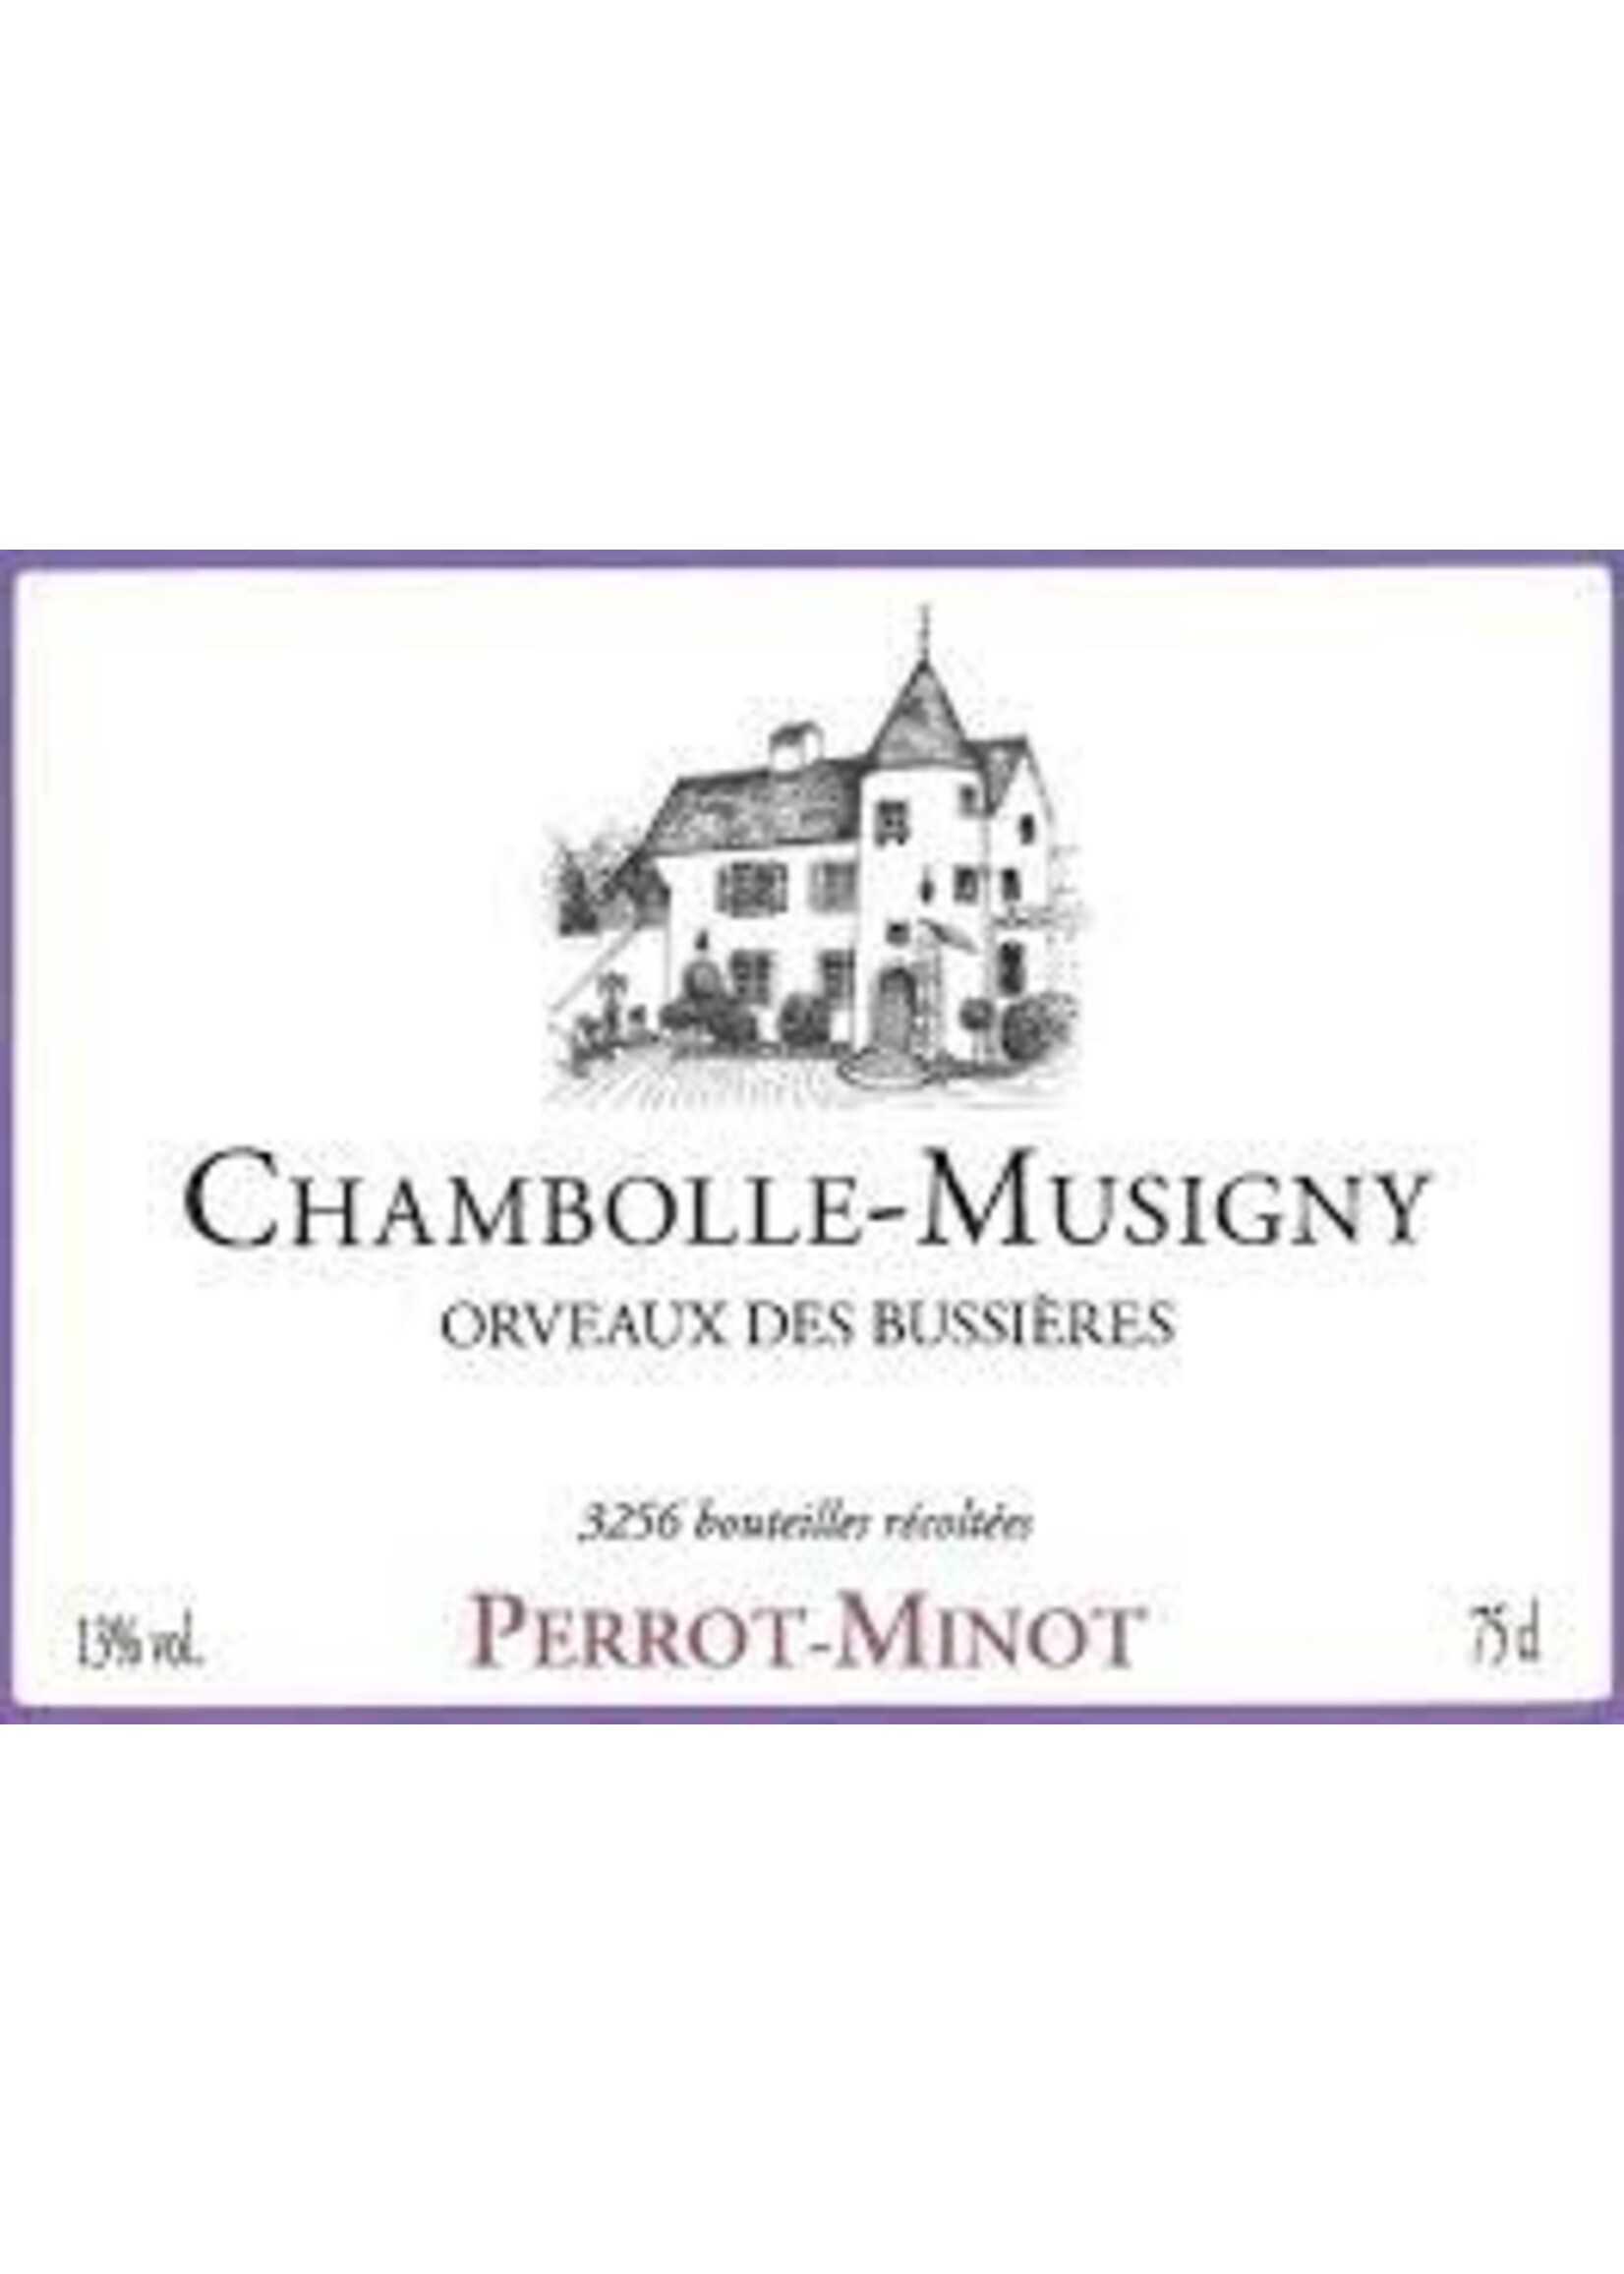 Perrot Minot 2020 Chambolle-Musigny Orveaux des Bussieres V.V. 750ml